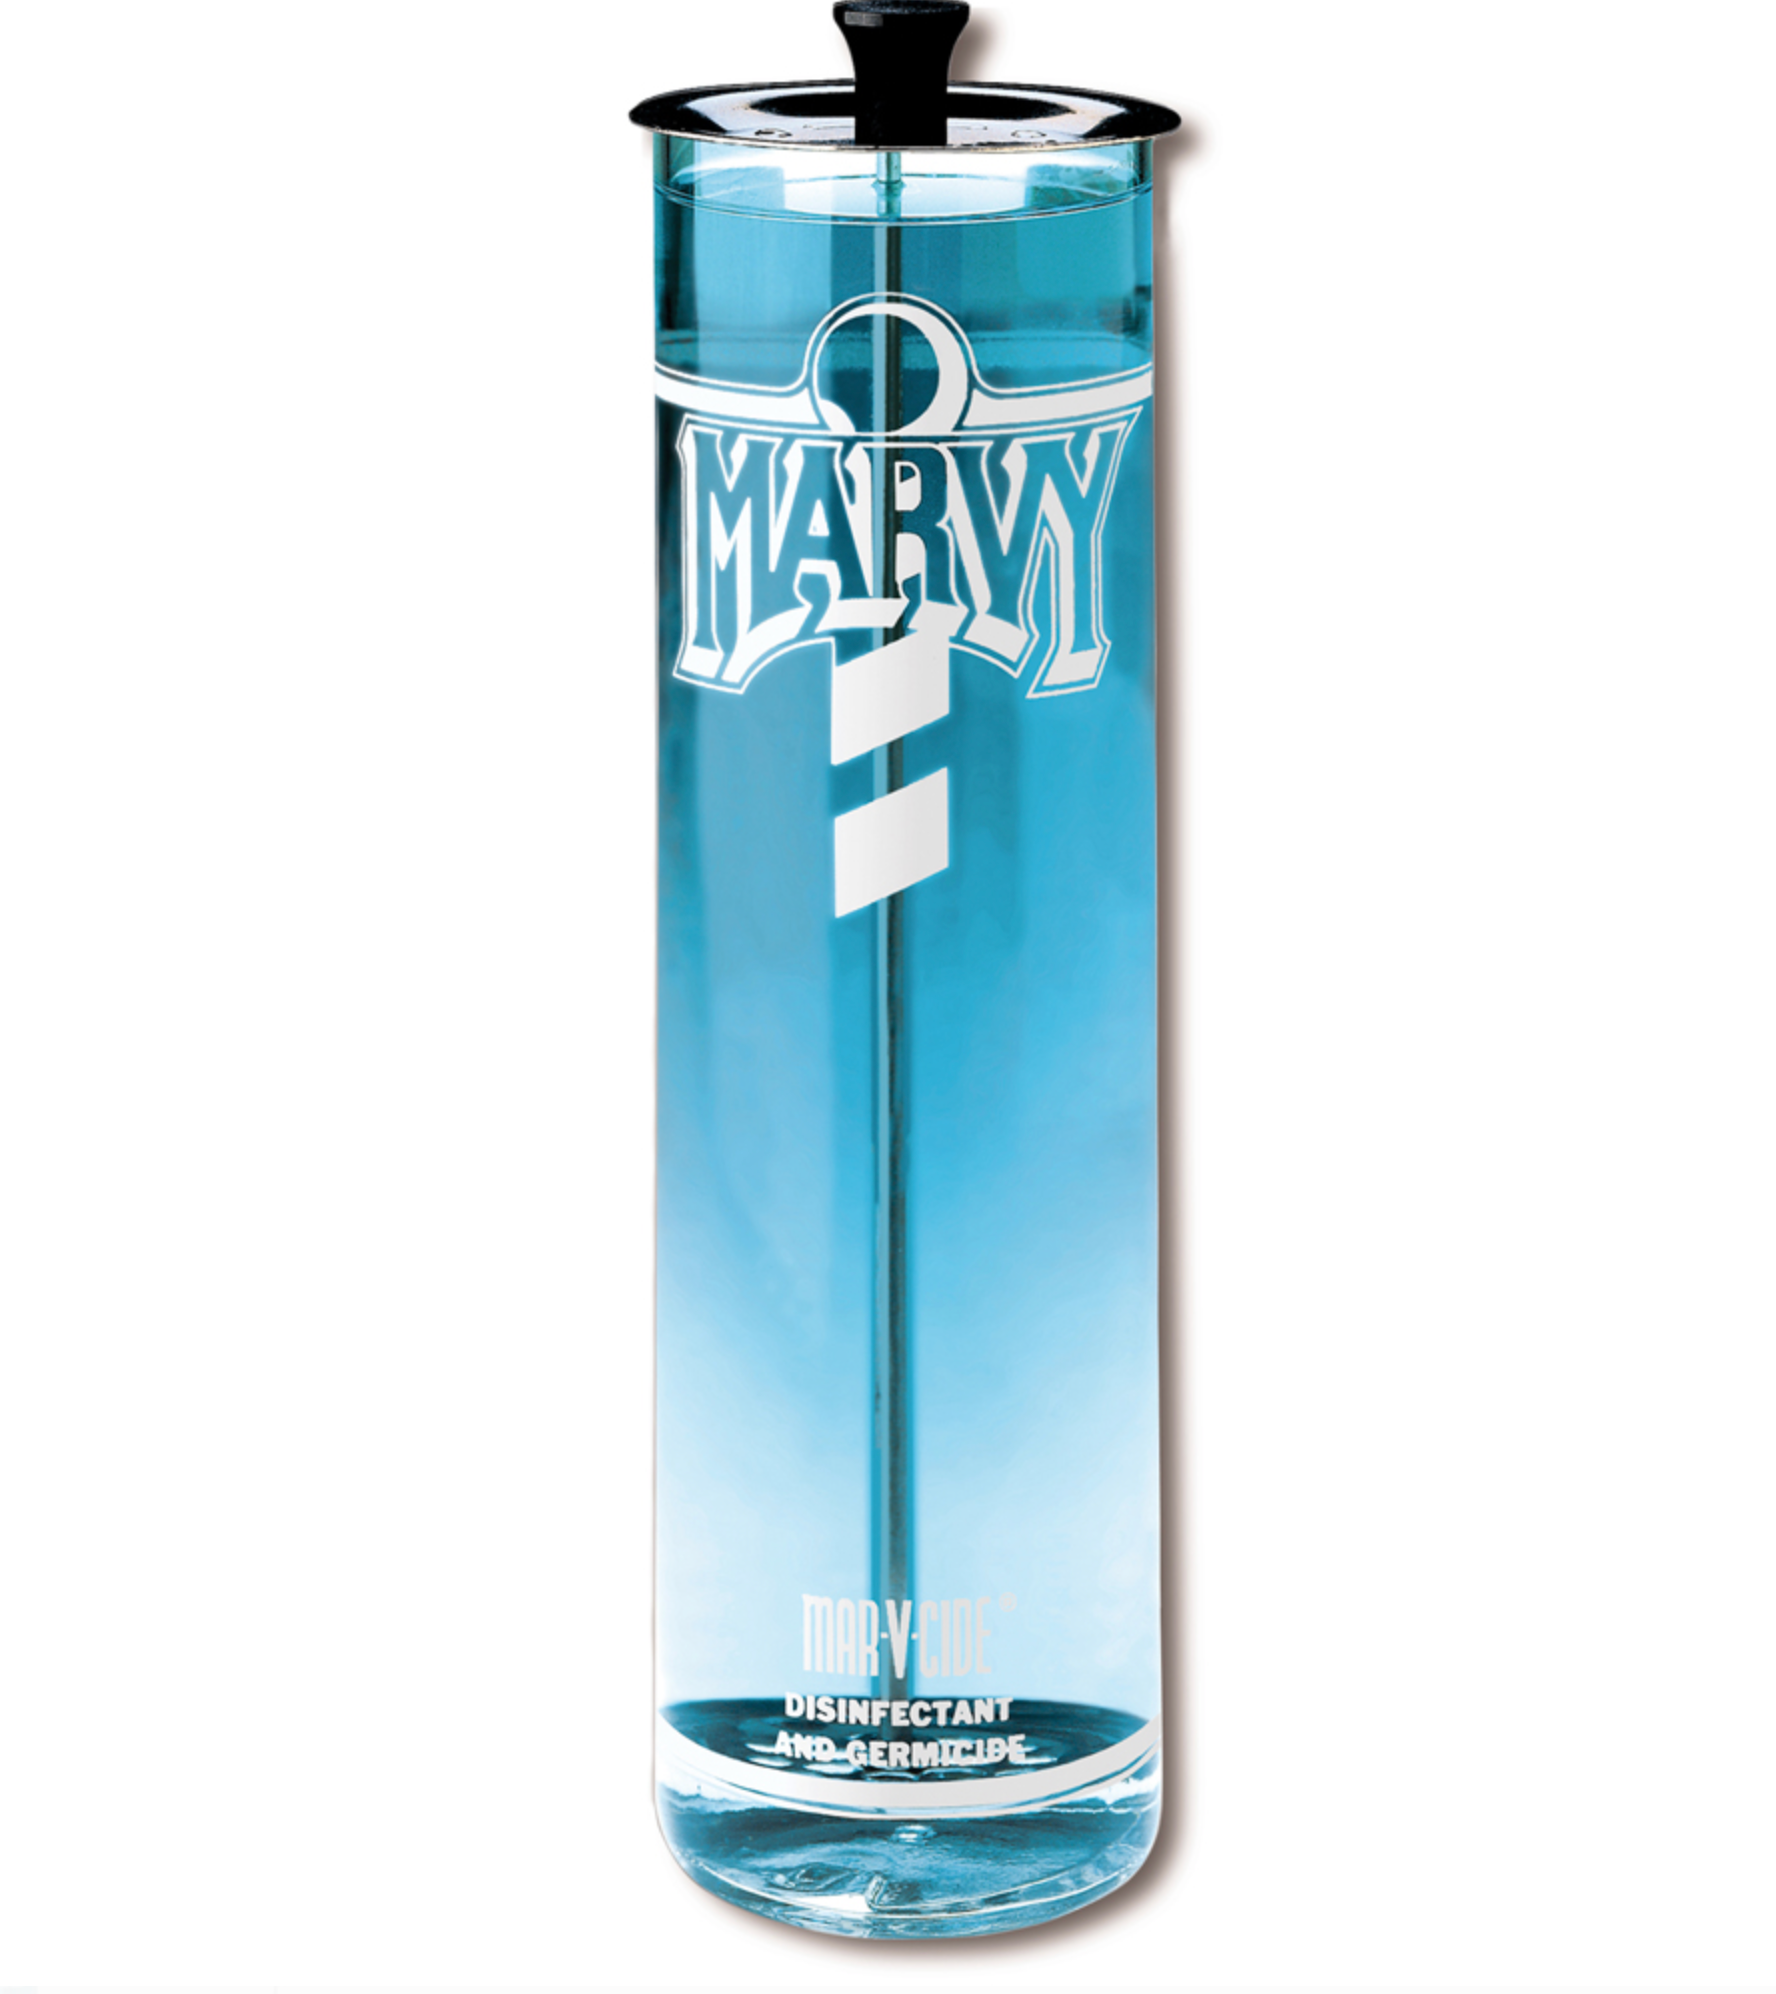 Marvy Unbreakable Disinfectant Jar 25oz - Acrylic #3